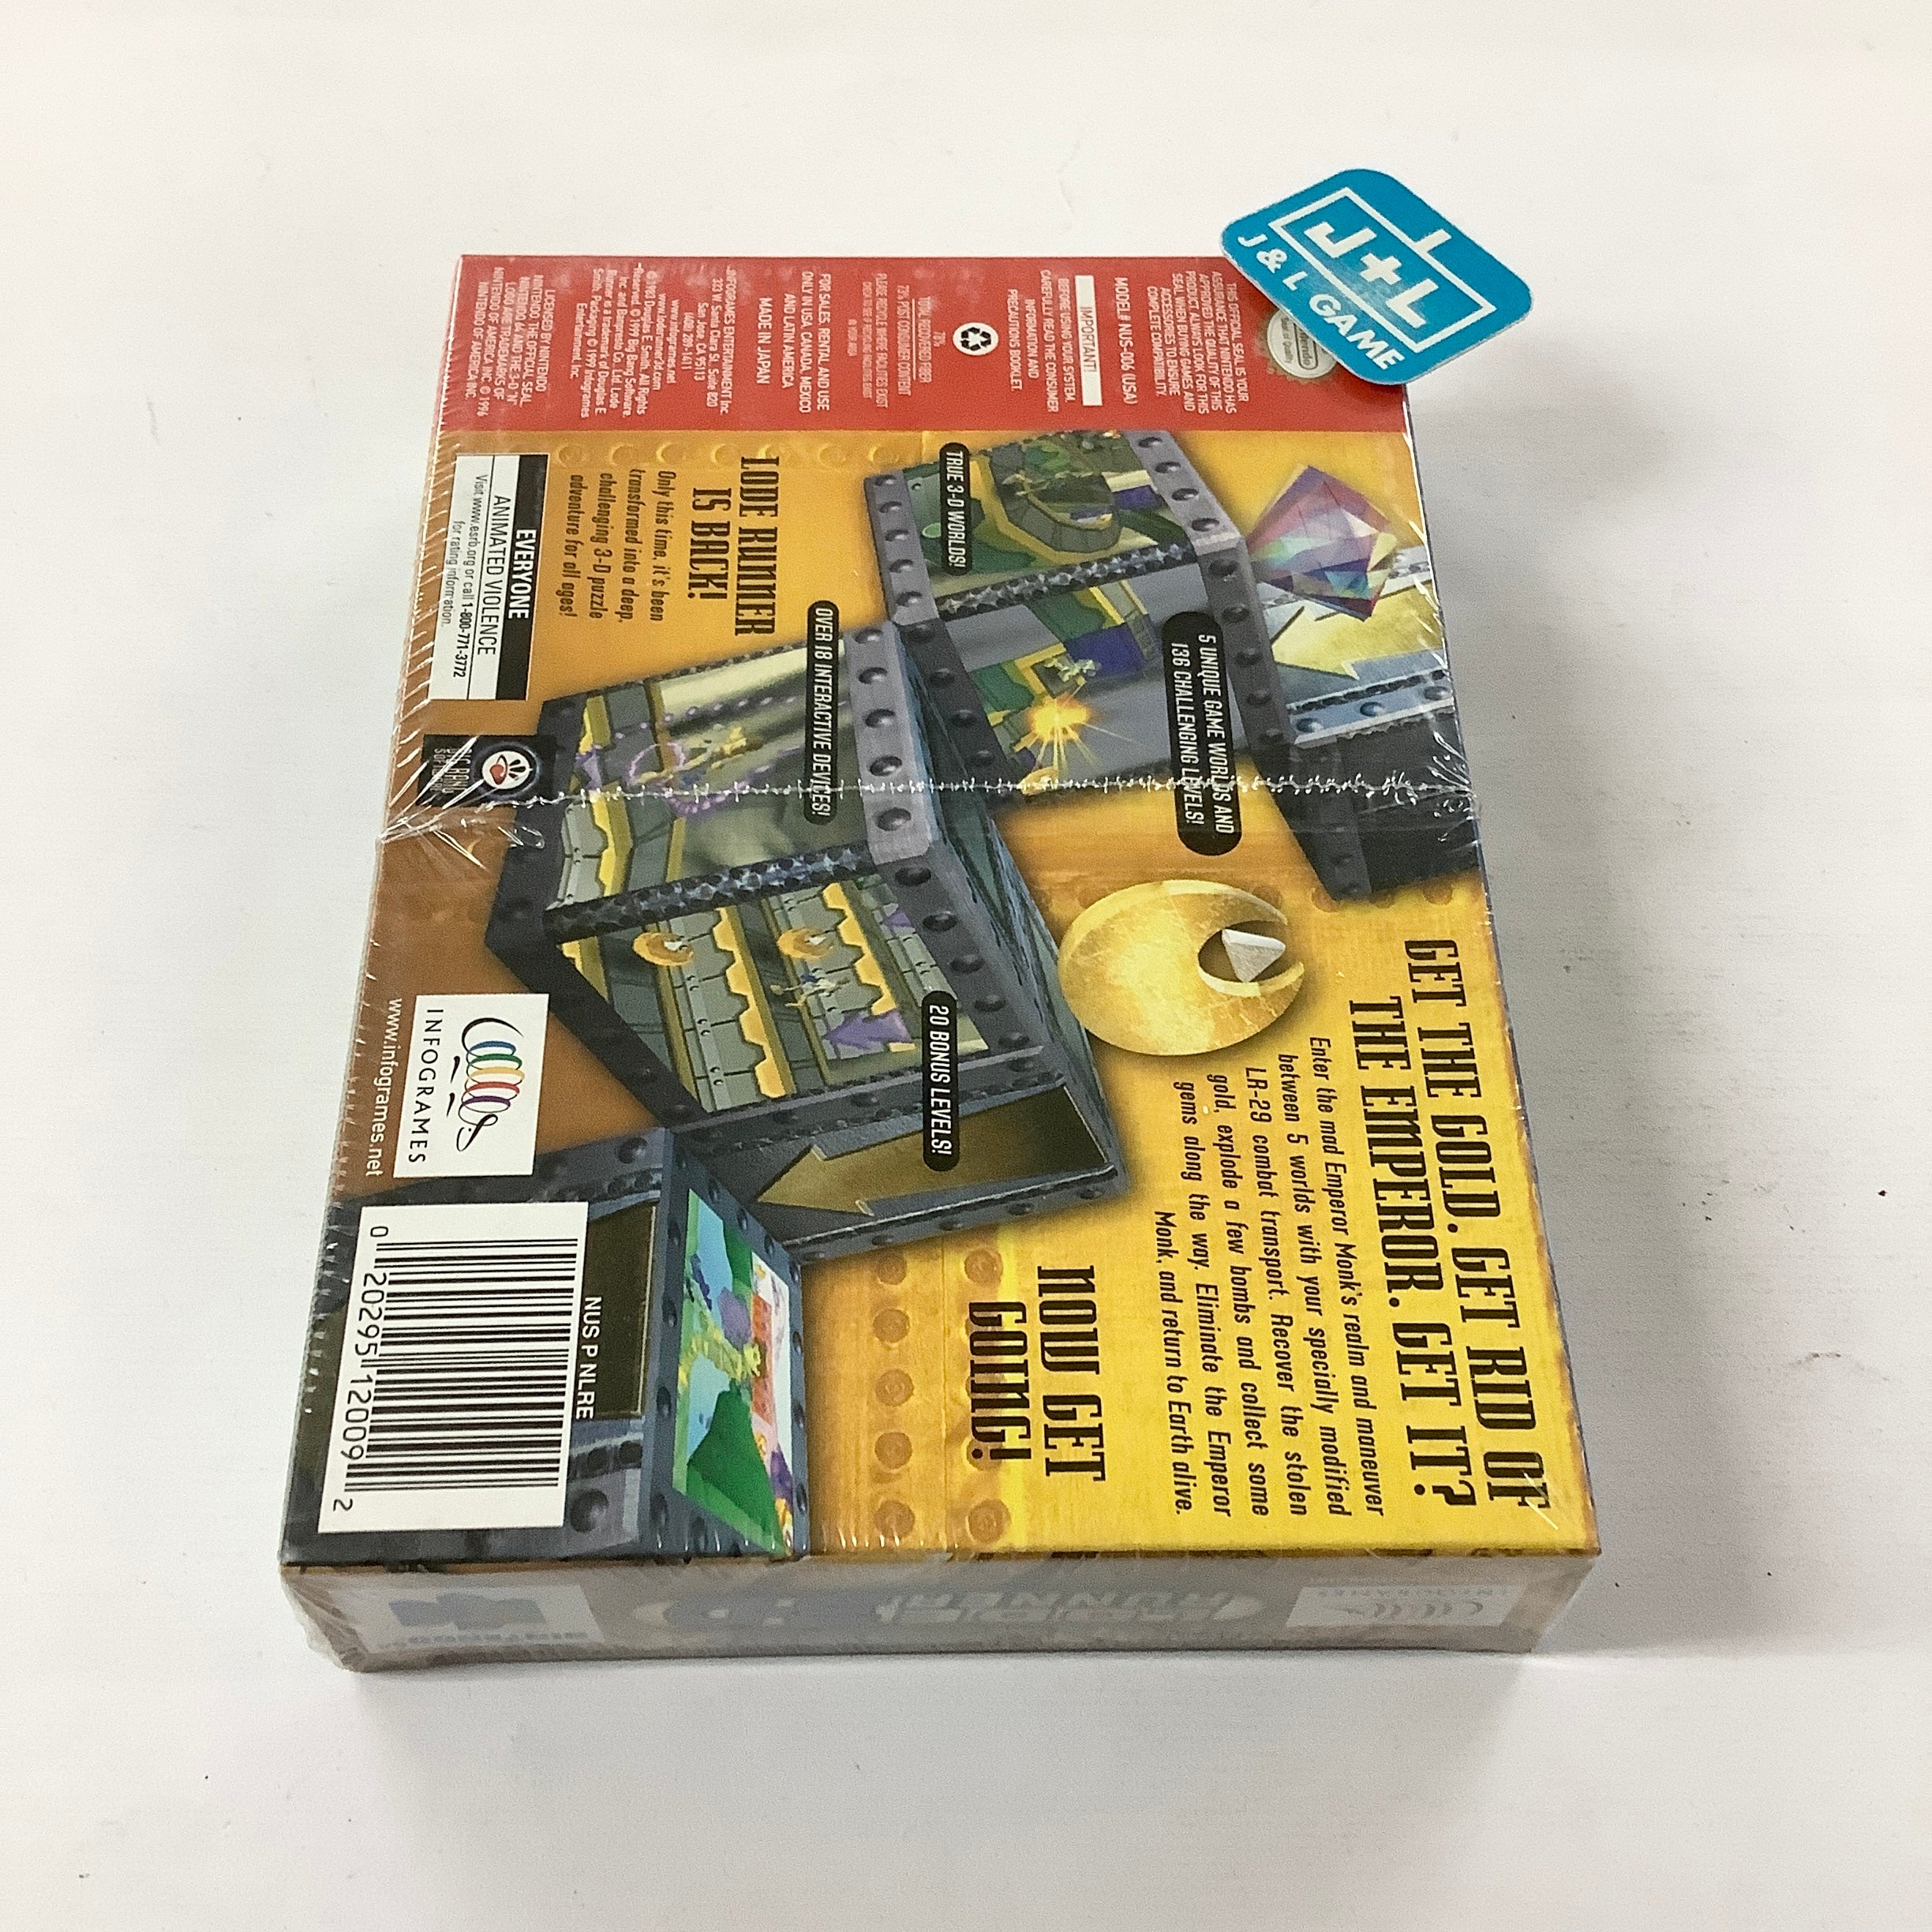 Lode Runner 3-D - (N64) Nintendo 64 Video Games Infogrames   